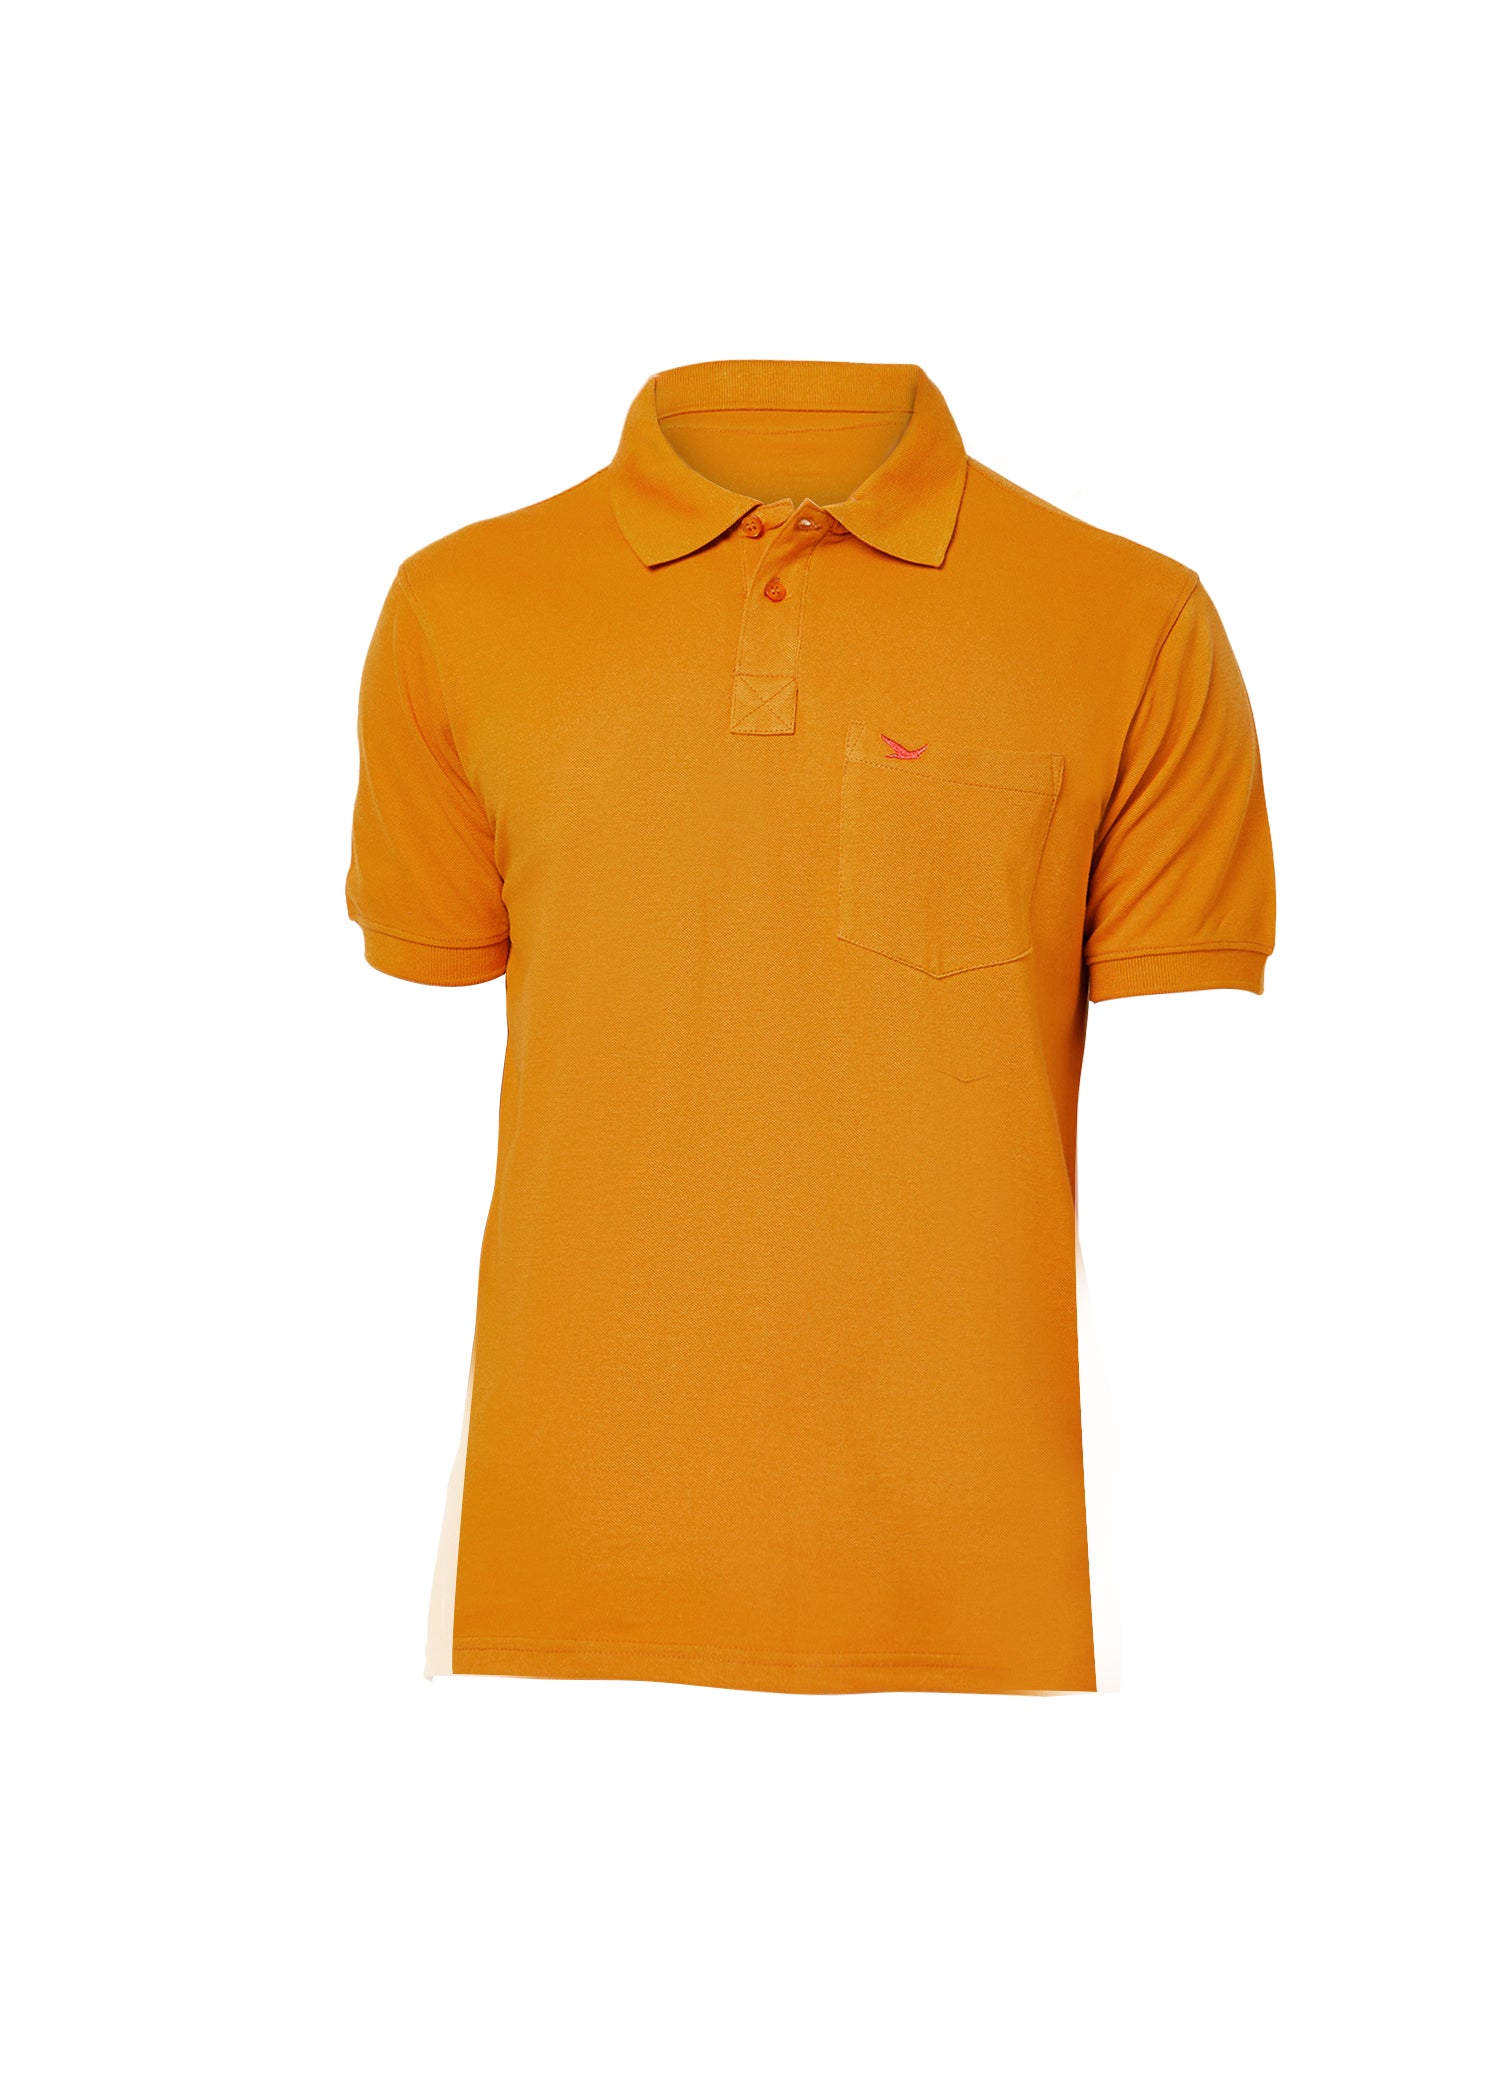 Hiflyers Men'S Solid Regular Fit Polo T-Shirt With Pocket -Dark Mustard